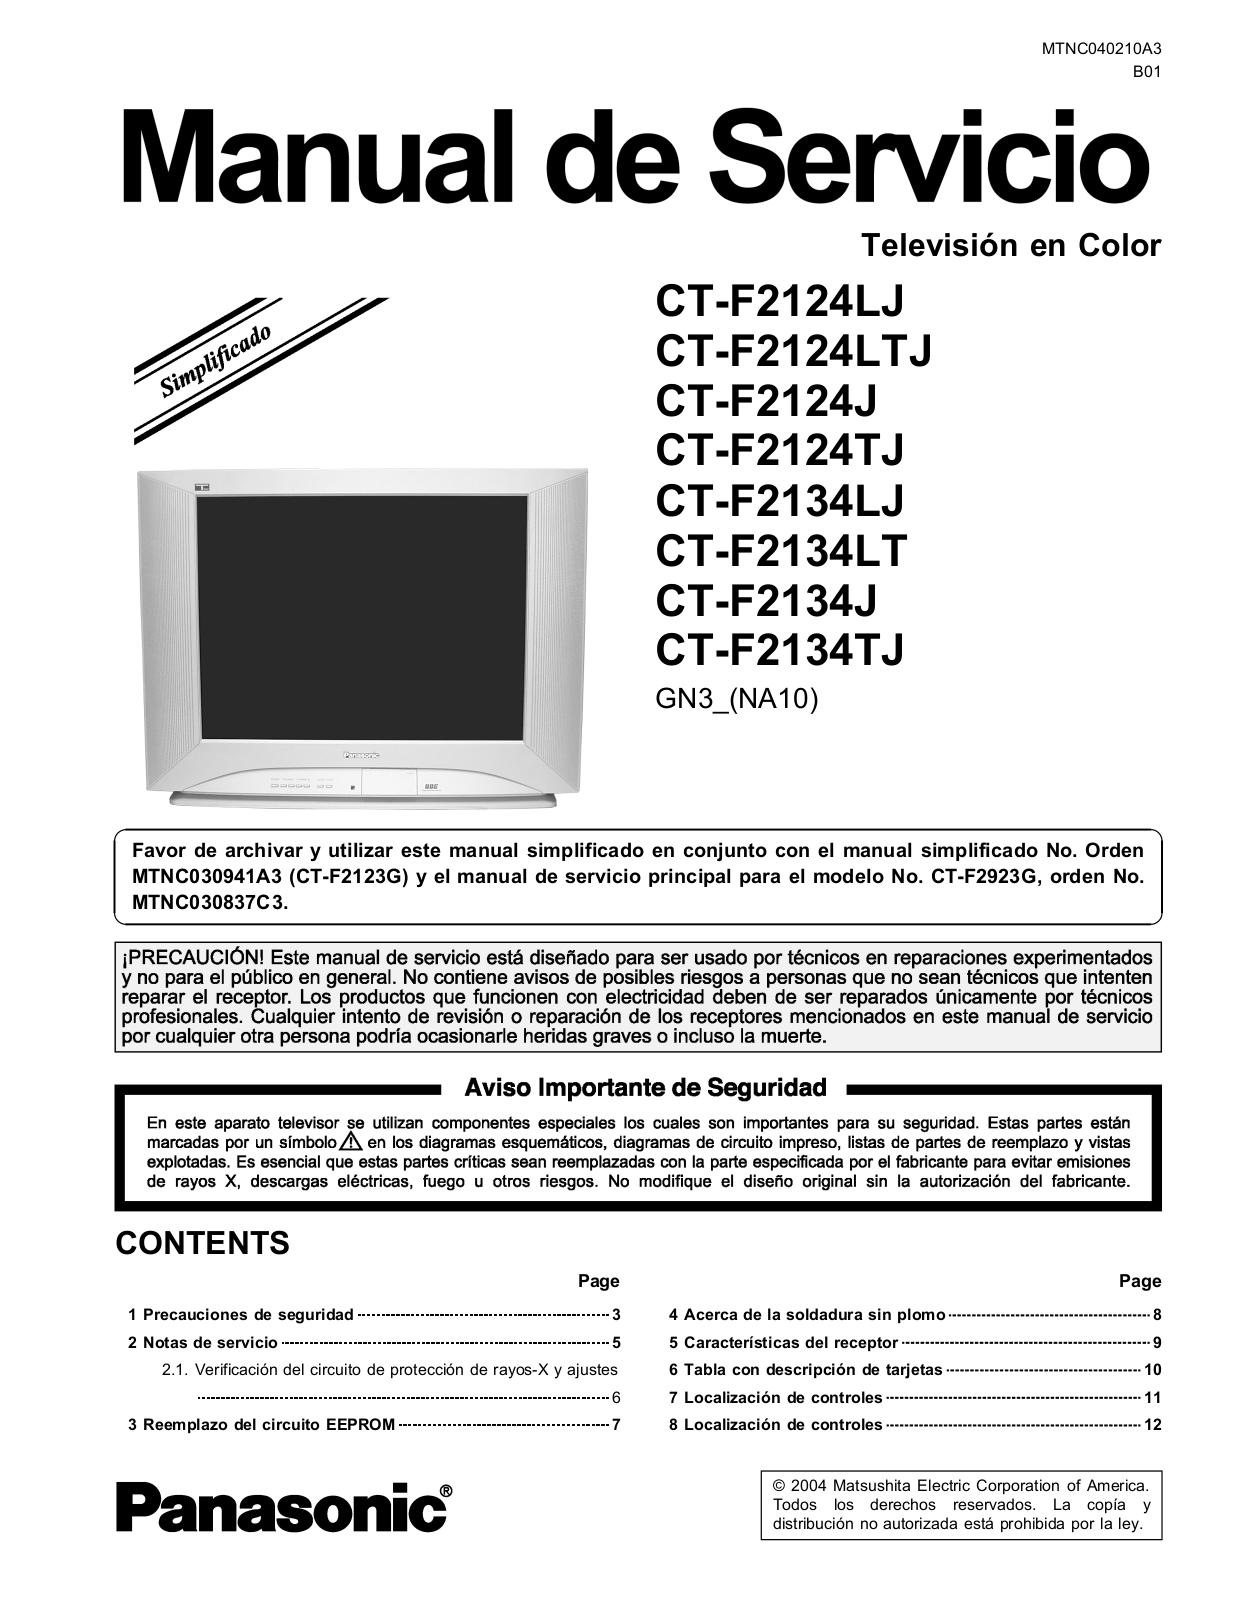 Panasonic CT-F2124LTJ, CT F2124LJ, CT-F2124J, CT-F2124TJ, CT-F2134LJ Service Manual